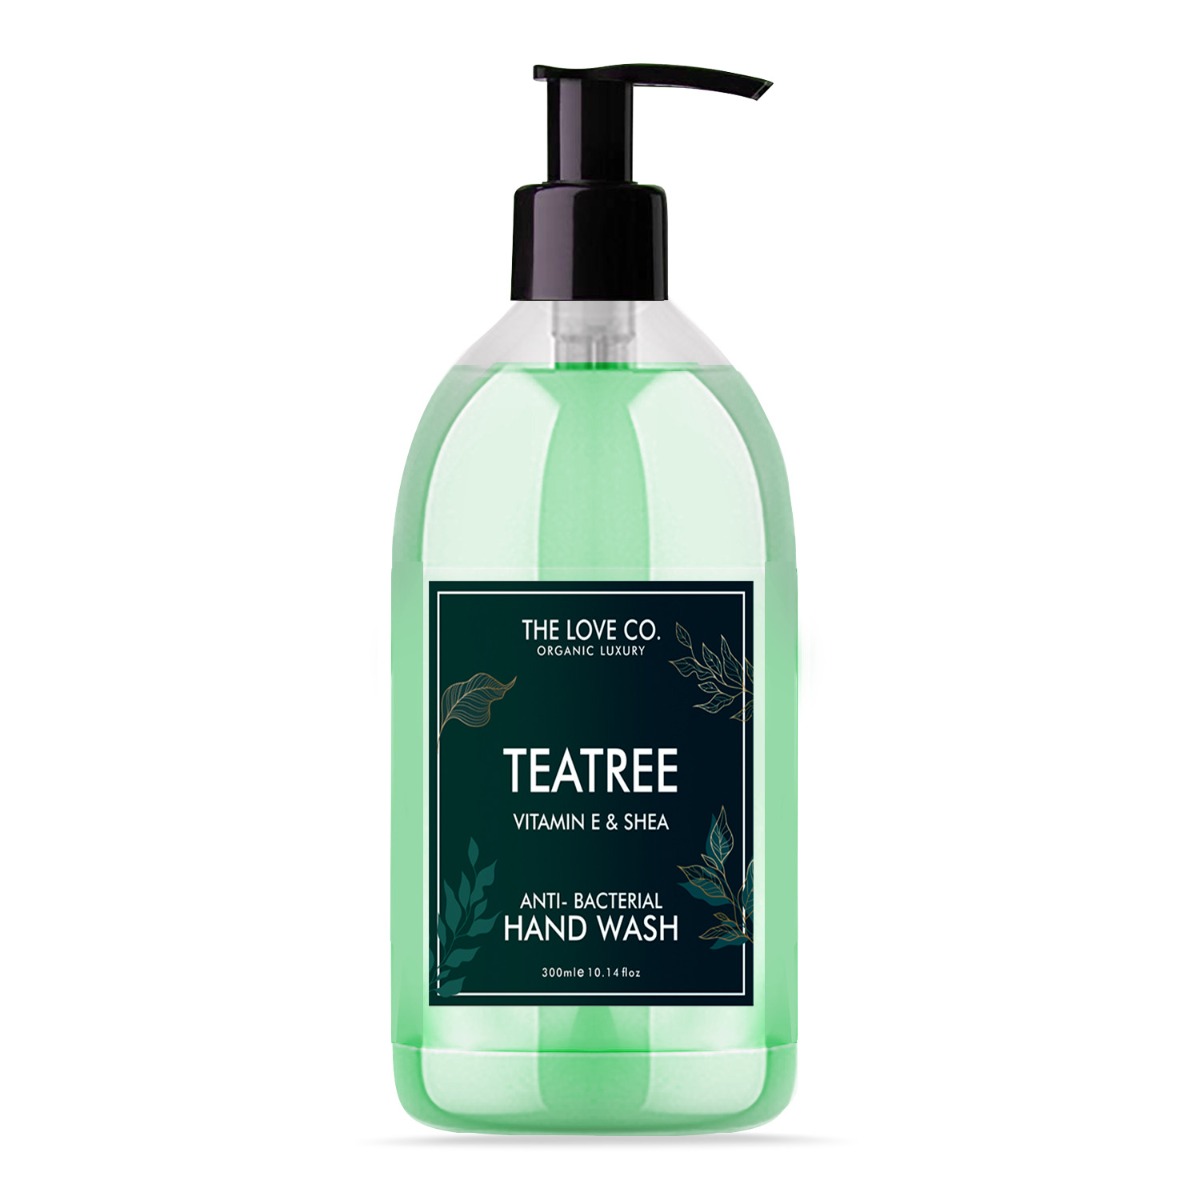 The Love Co. Tea Tree Anti-Bacterial Hand Wash, 300ml